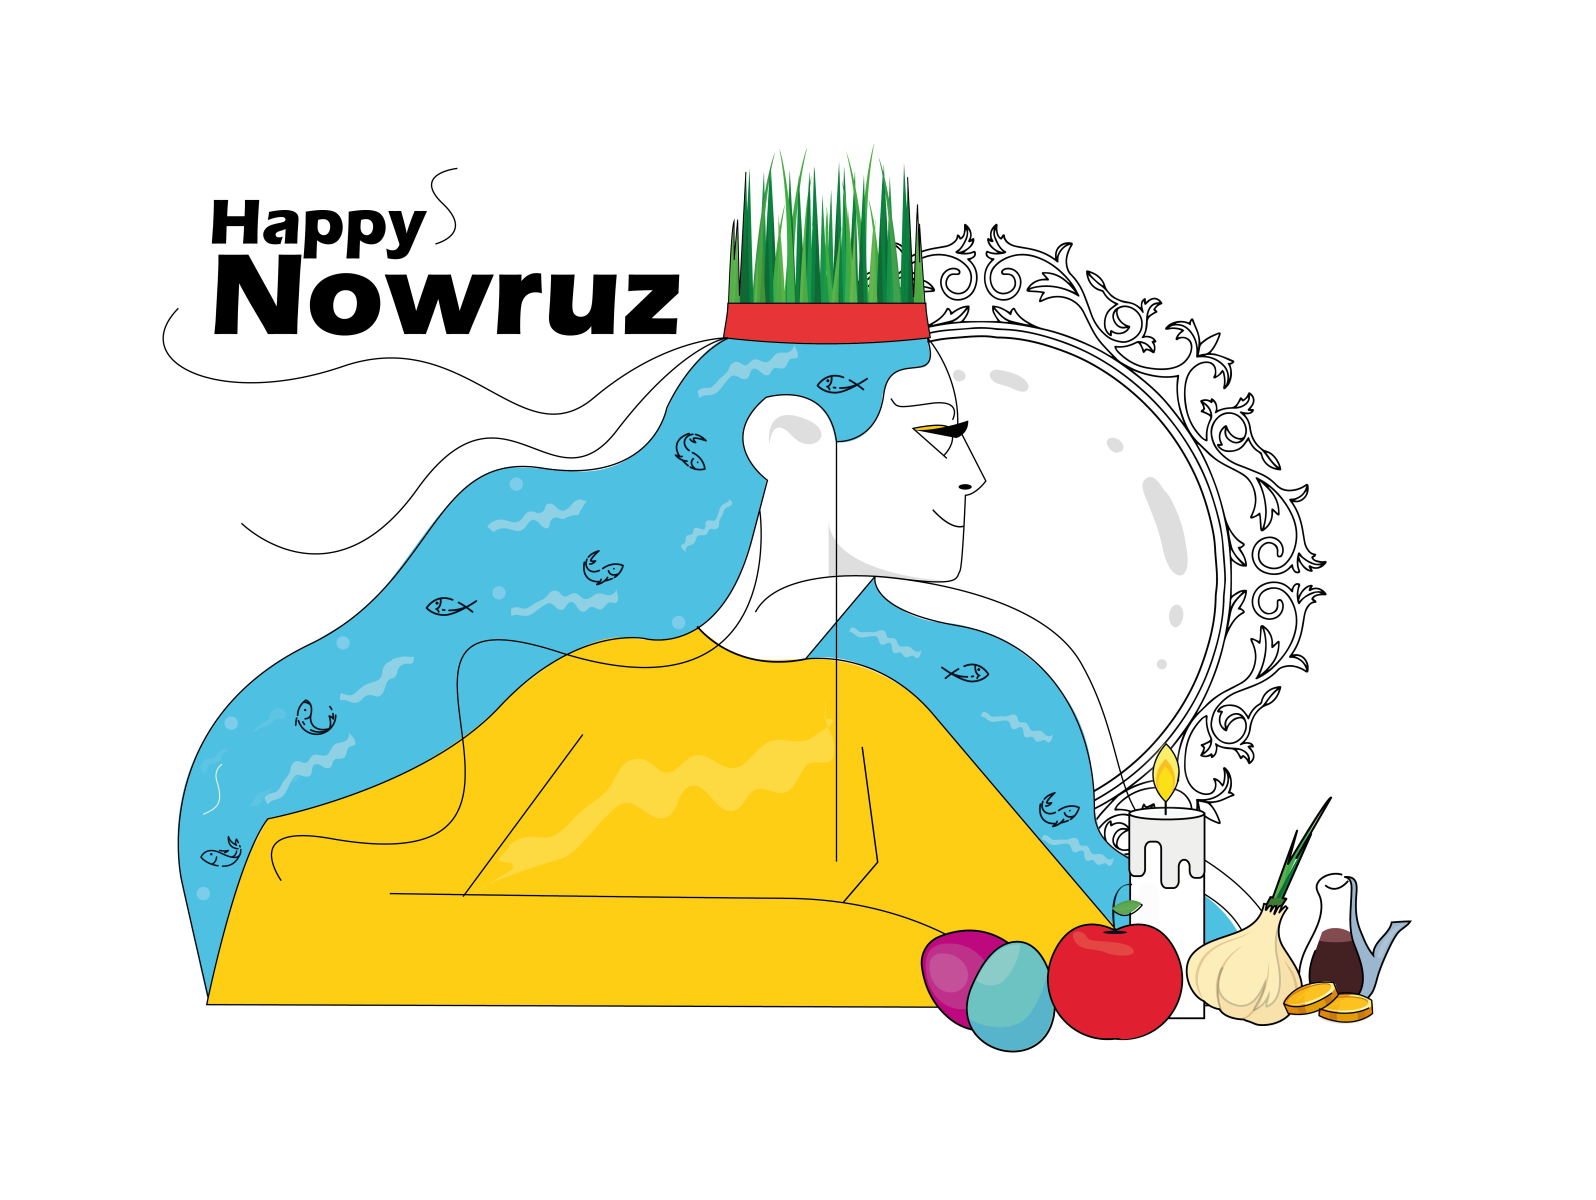 Happy Nowruz by Sodeh Mohammadabadi on Dribbble